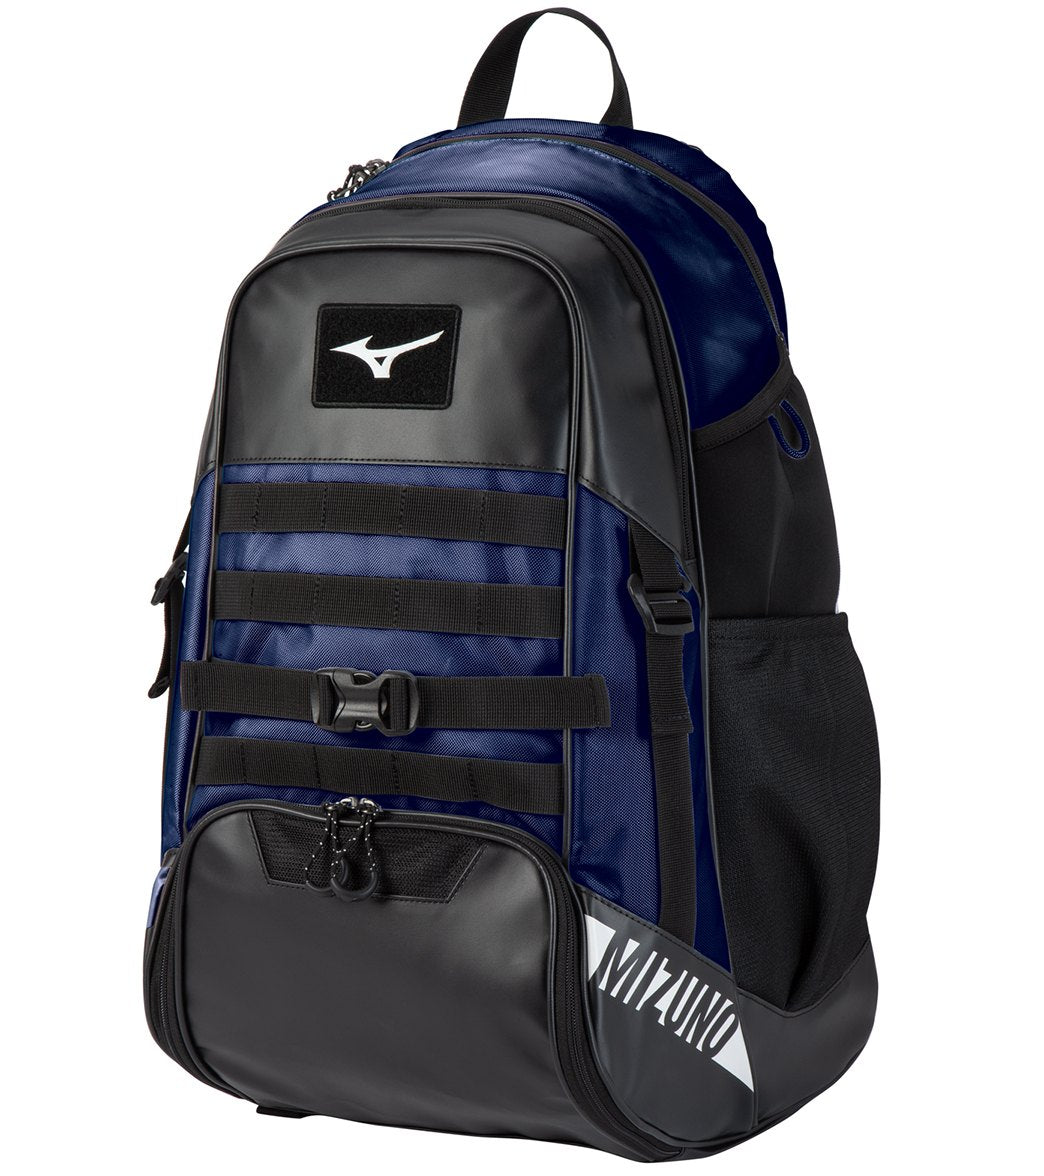 Mizuno Mvp X Backpack - Black-Navy Black/Navy - Swimoutlet.com